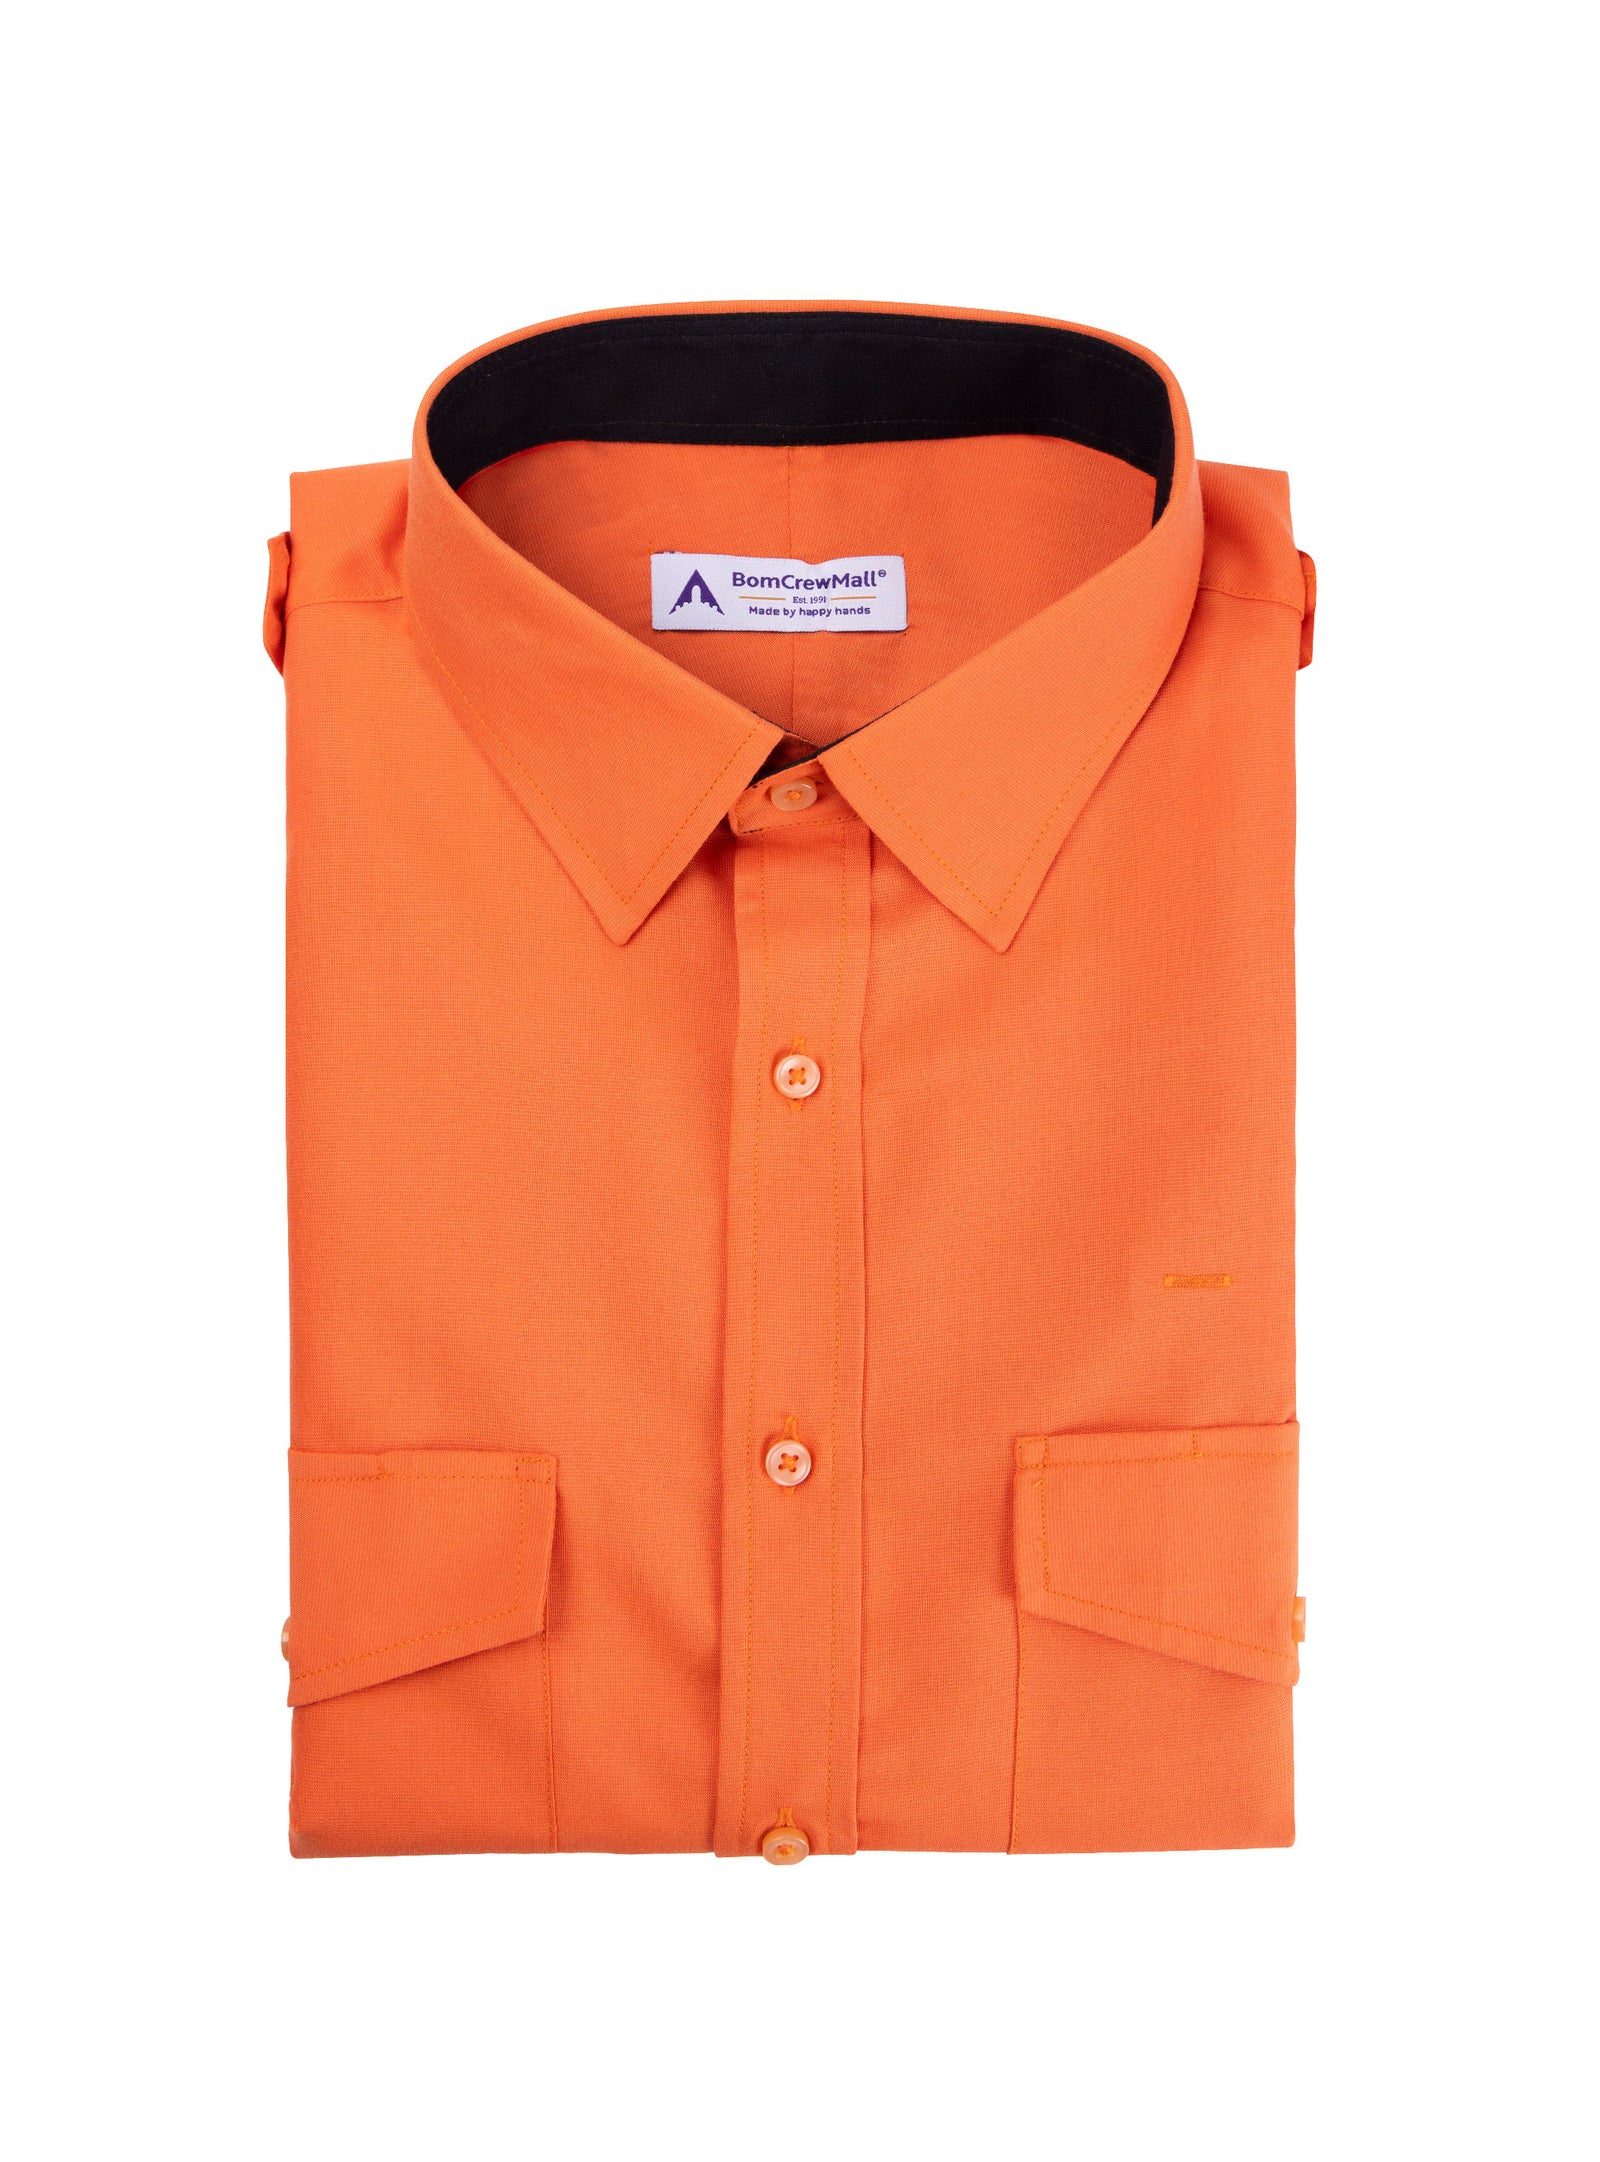 Orange In-Stock Pilot Shirt Men